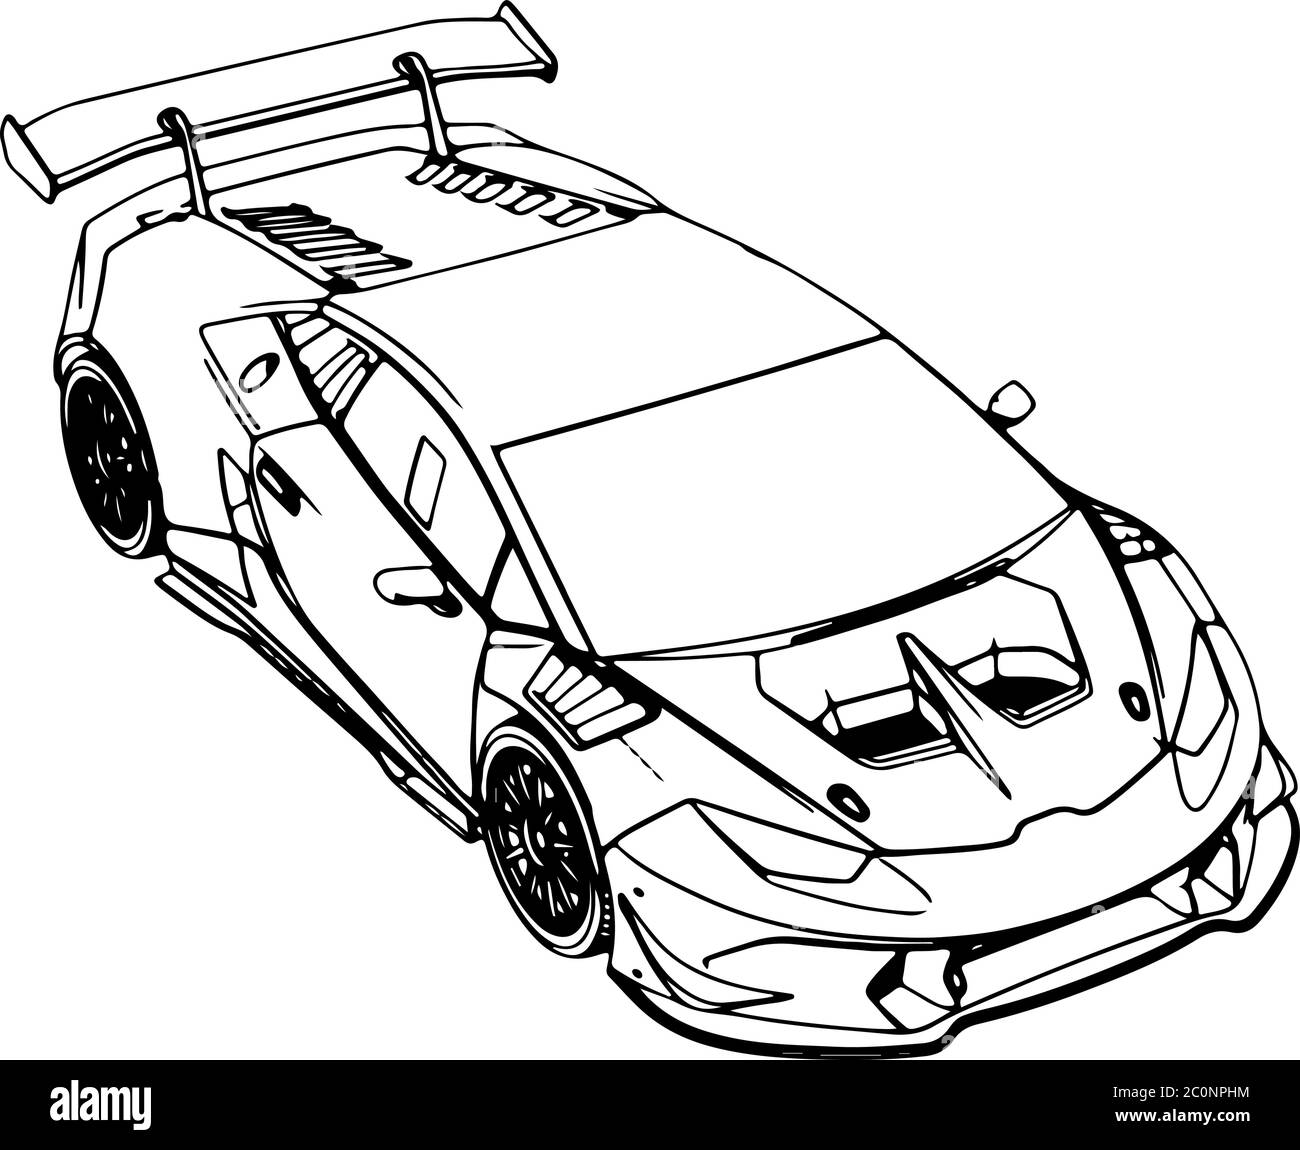 Car Conceptcar Sketchvector Hand Drawnautodesign Stock Illustration -  Download Image Now - iStock